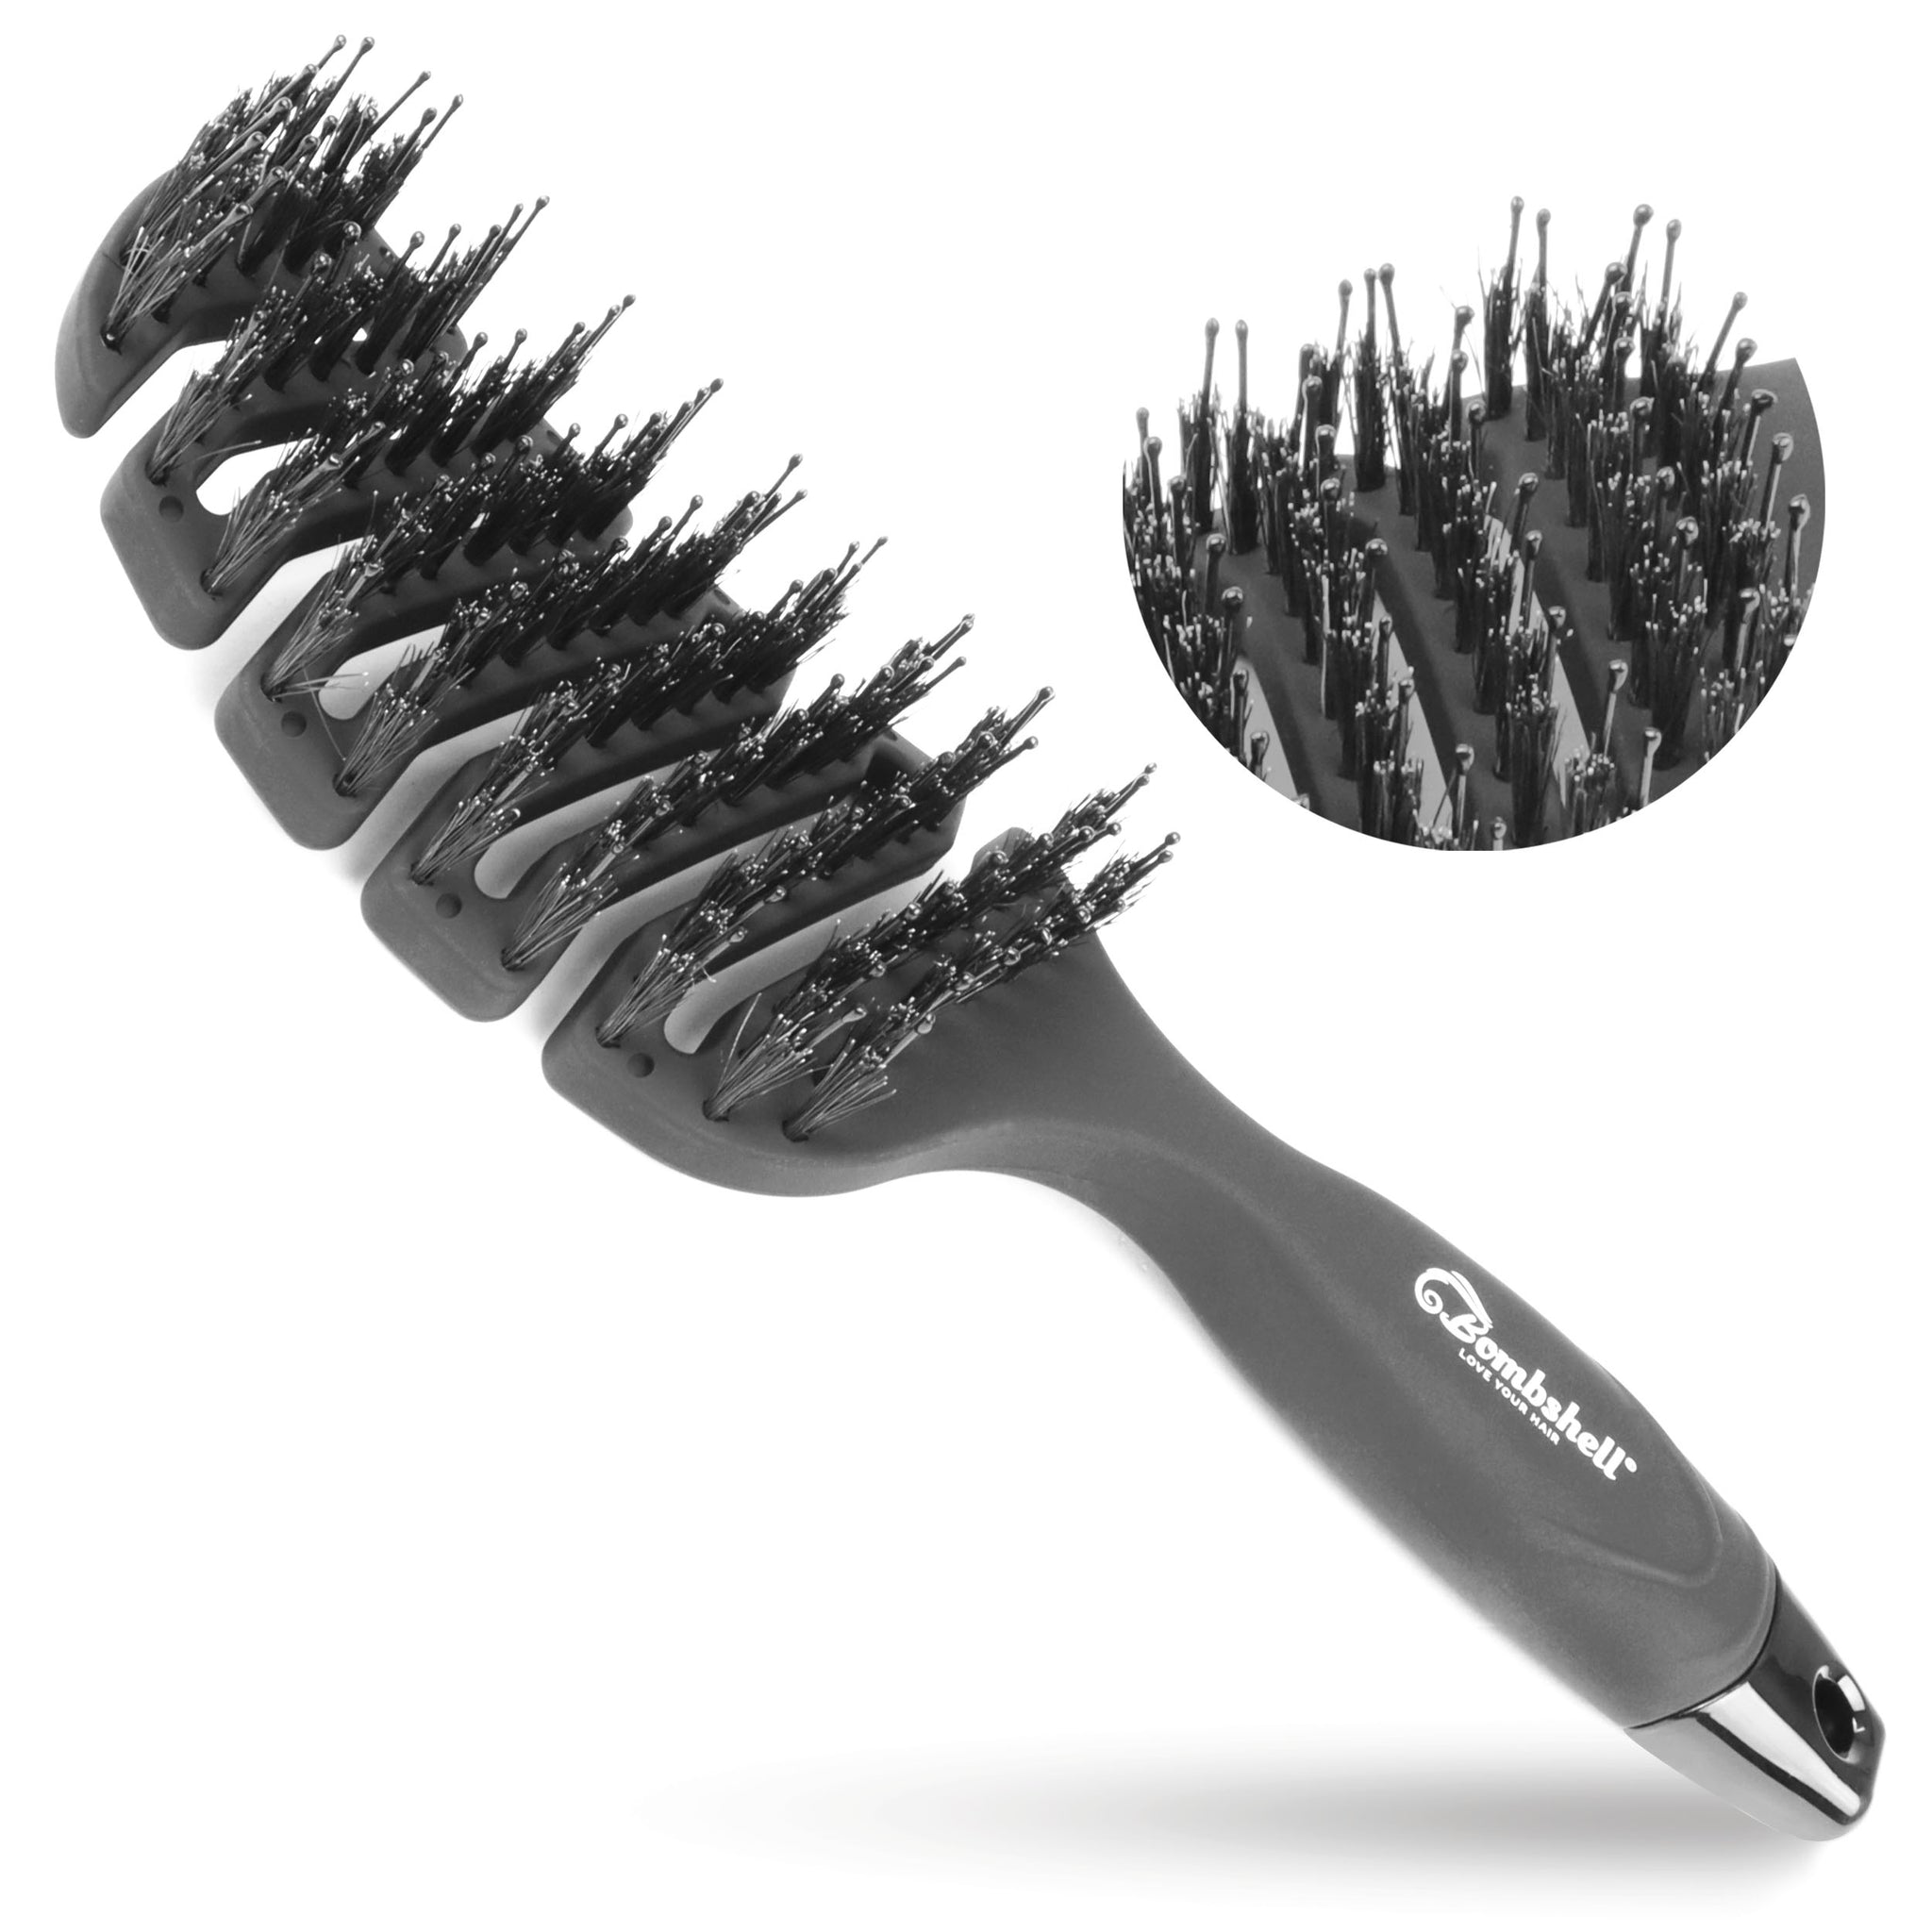 Boar Bristle Brush | Beard Brush With Boar Hair & Nylon/Natural Bristles